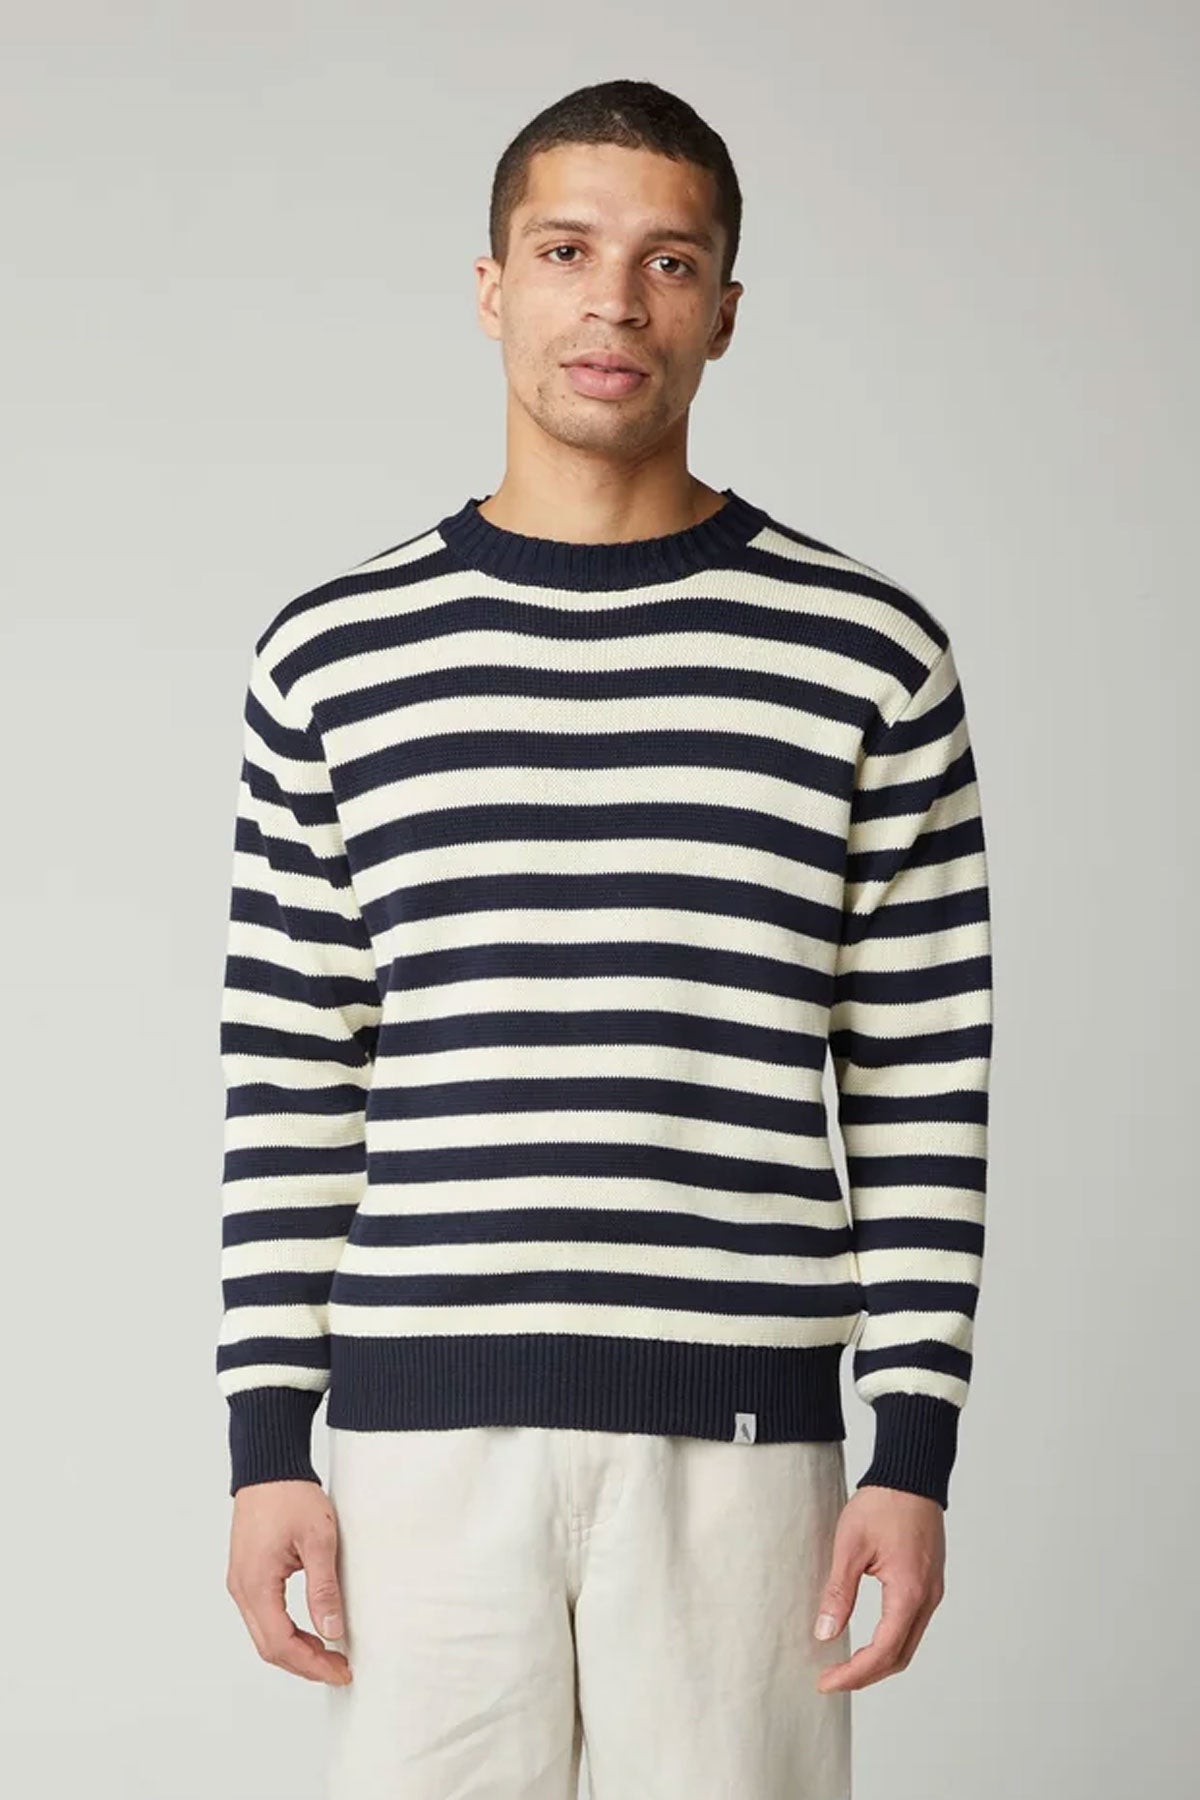 Peregrine - Richmond Sweater in Navy